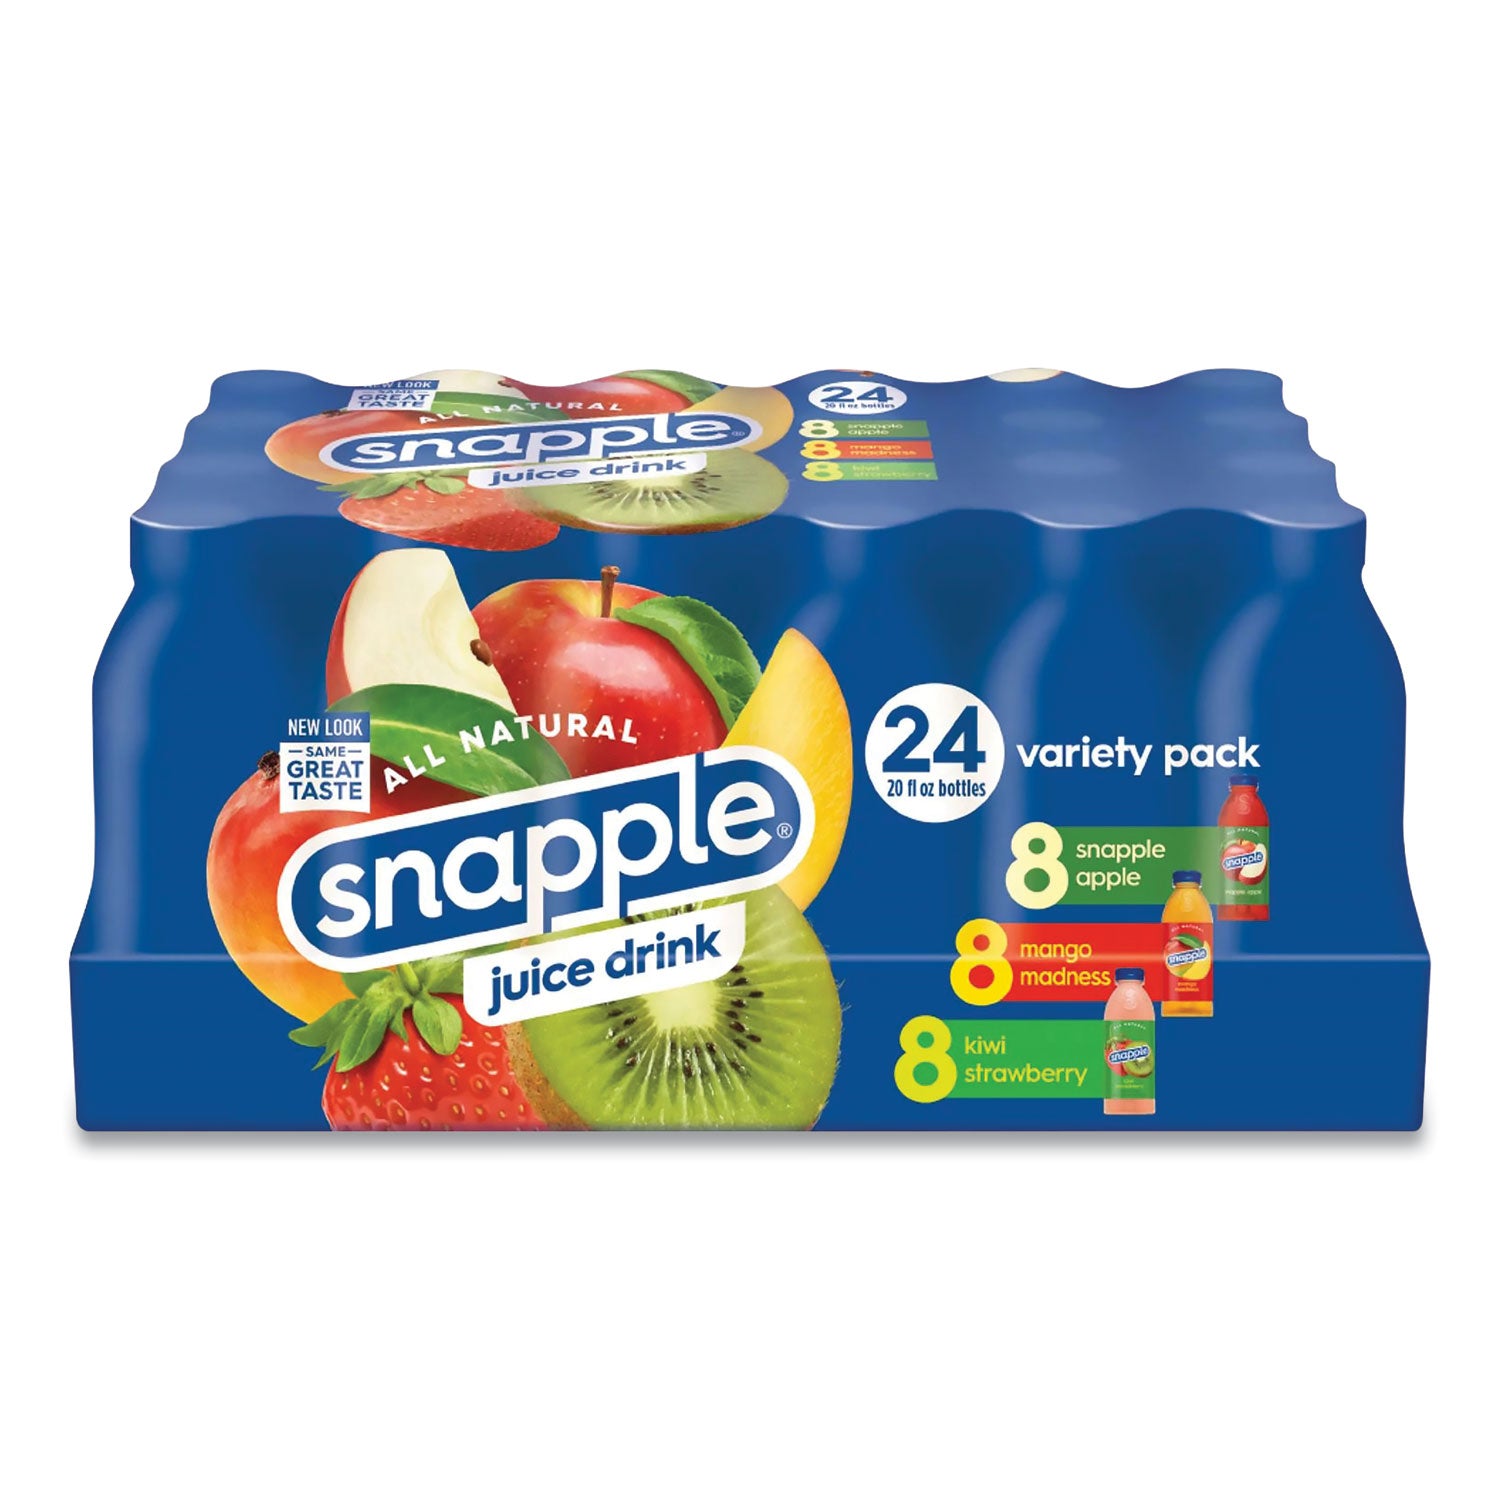 juice-drink-variety-pack-snapple-apple-kiwi-strawberry-mango-madness-20-oz-bottle-24-carton-ships-in-1-3-business-days_grr22000813 - 1